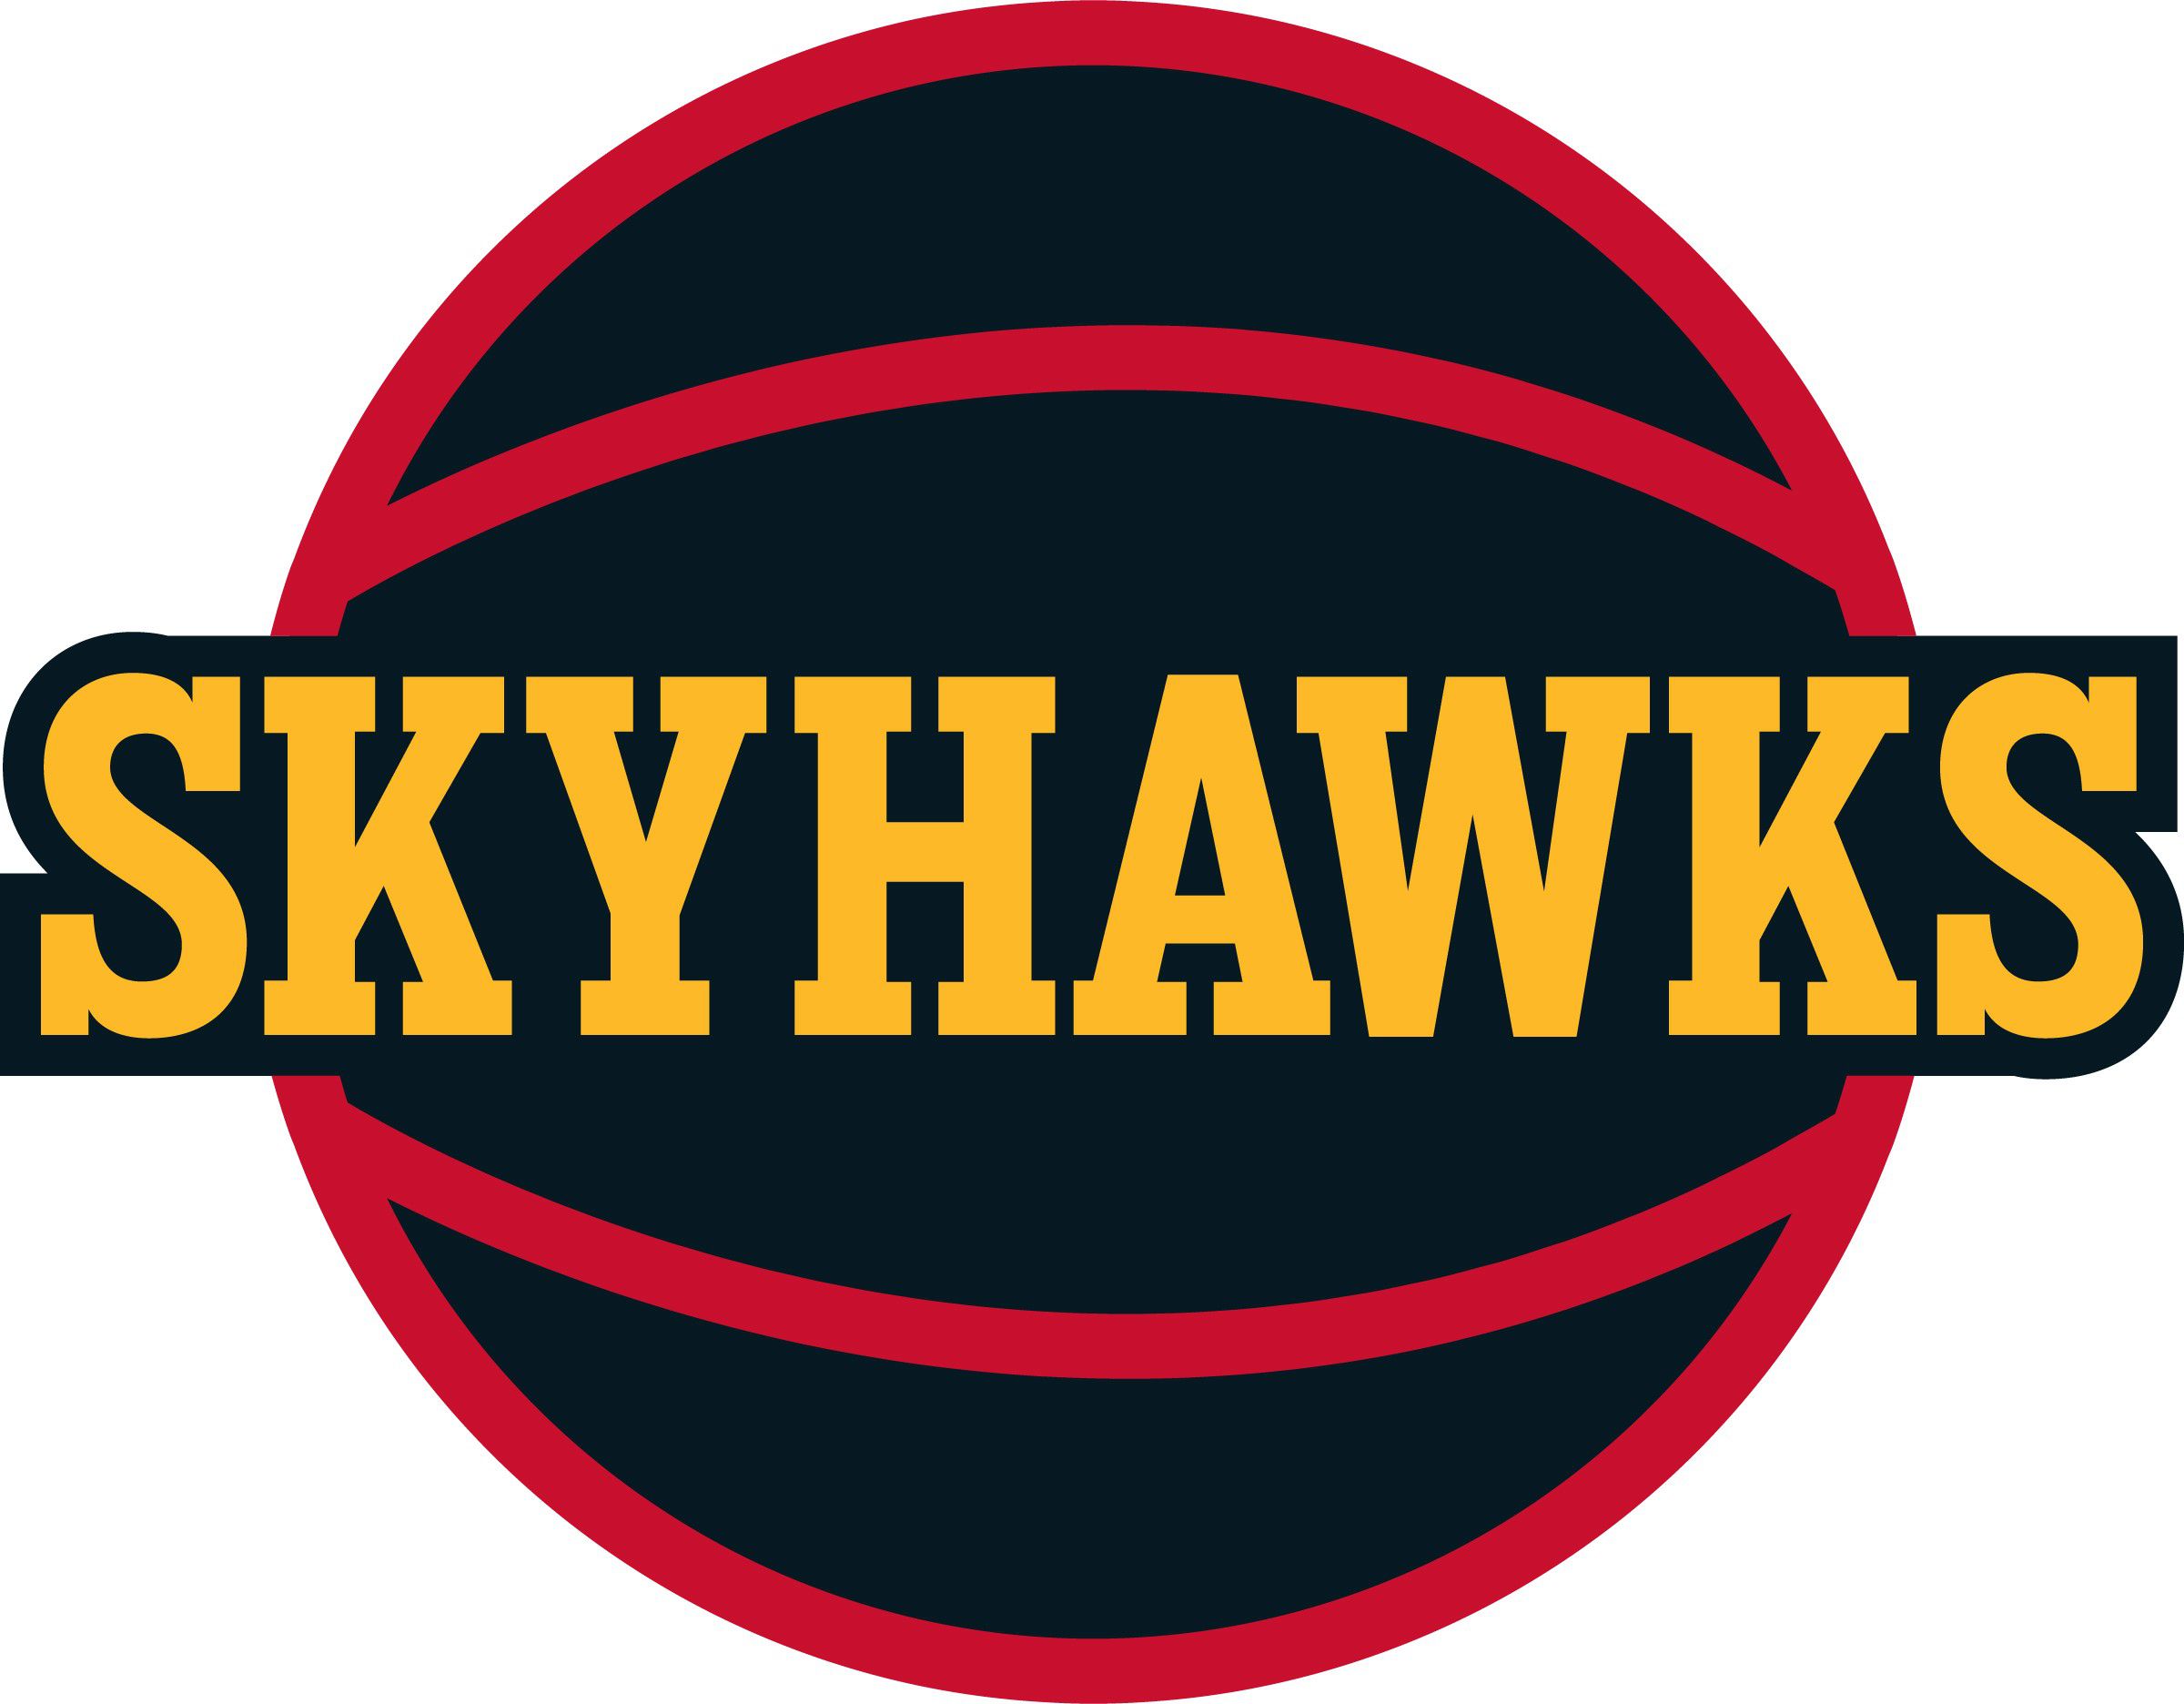 Atlanta Hawks invite 2 chainz to perform - Sports Illustrated